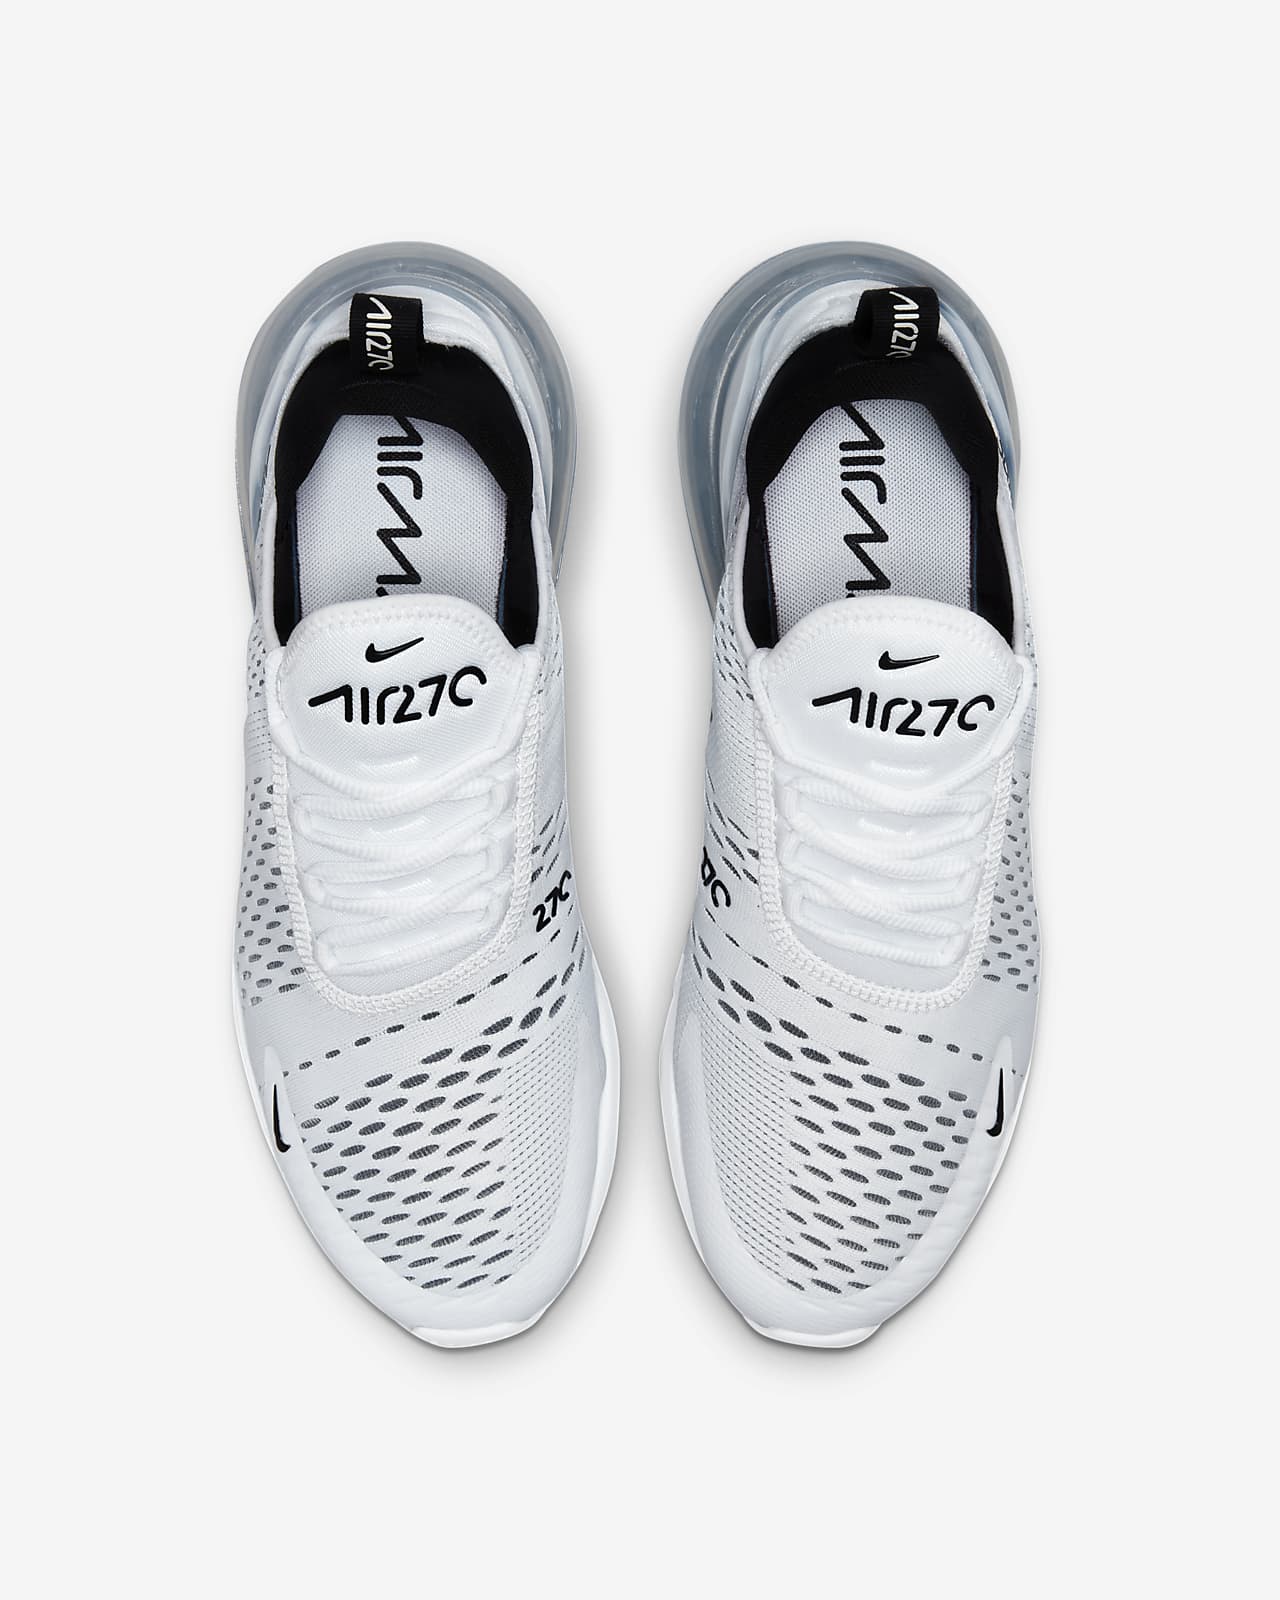 Nike Air Max 270 Black White - Size 7.5 Men